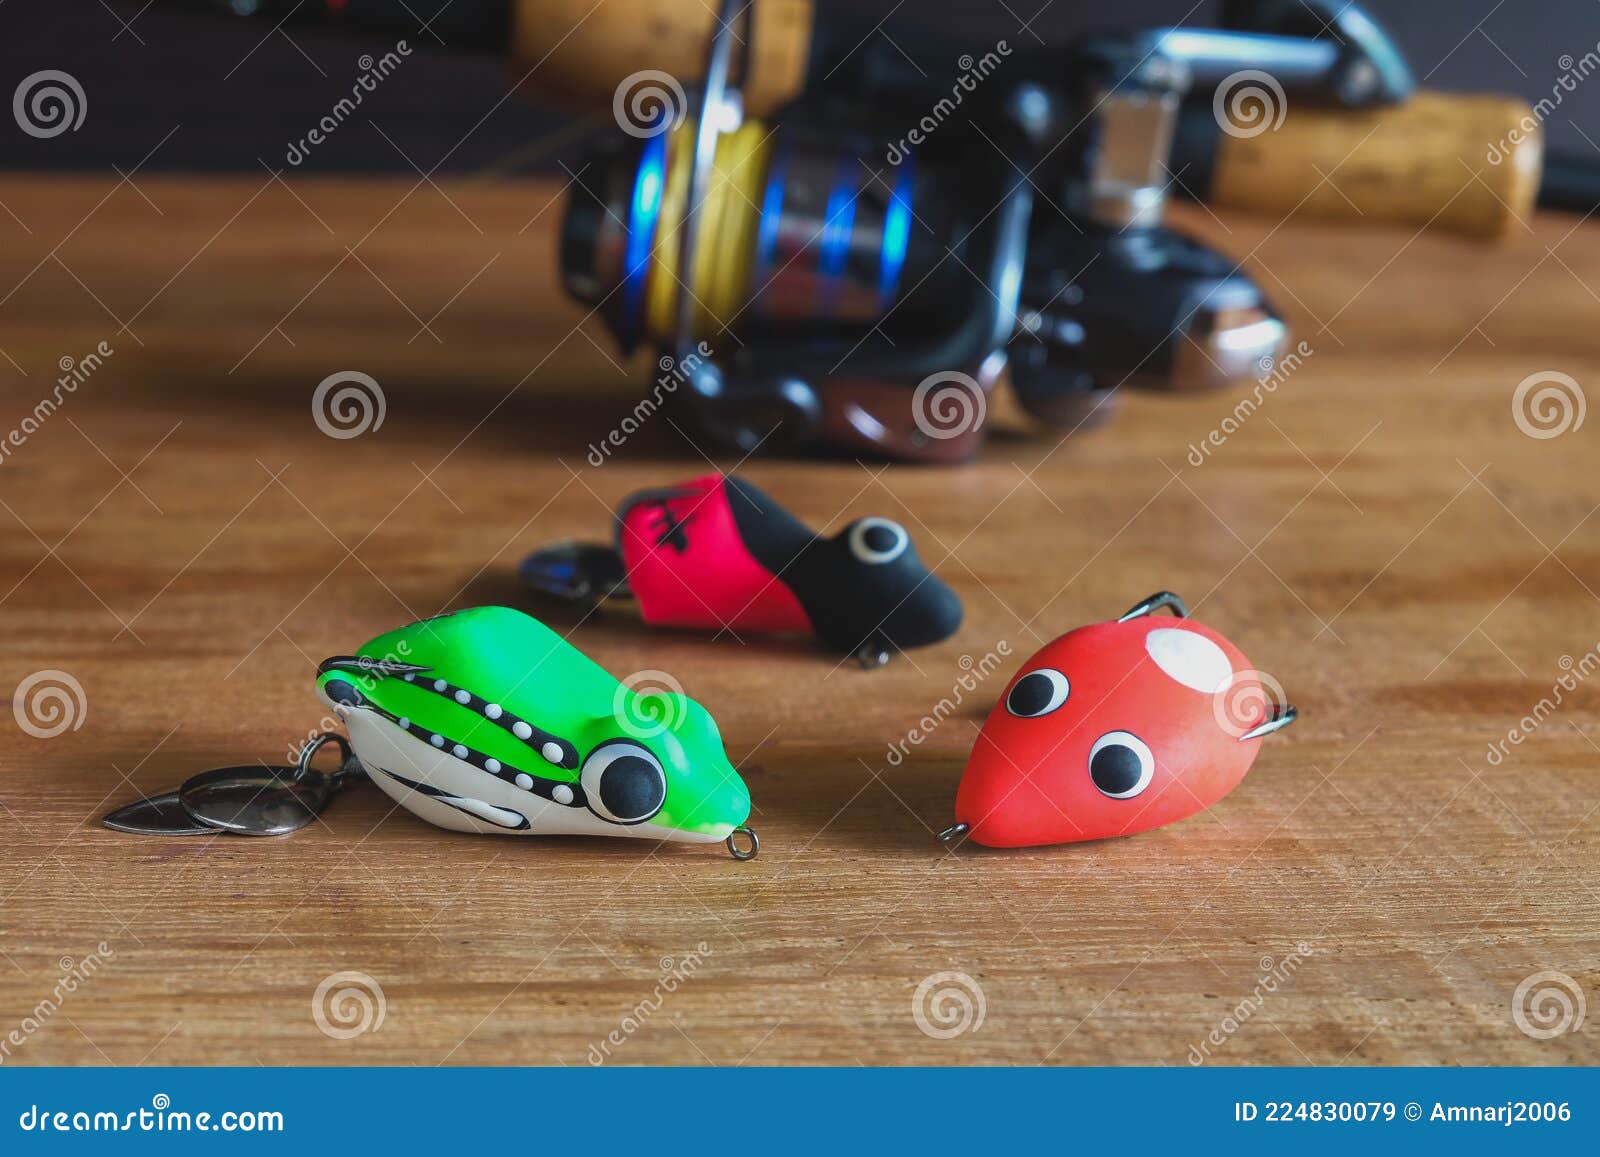 Soft Plastic Frog Lure with Fiishing Spinning . Stock Image - Image of  hobby, object: 224830079